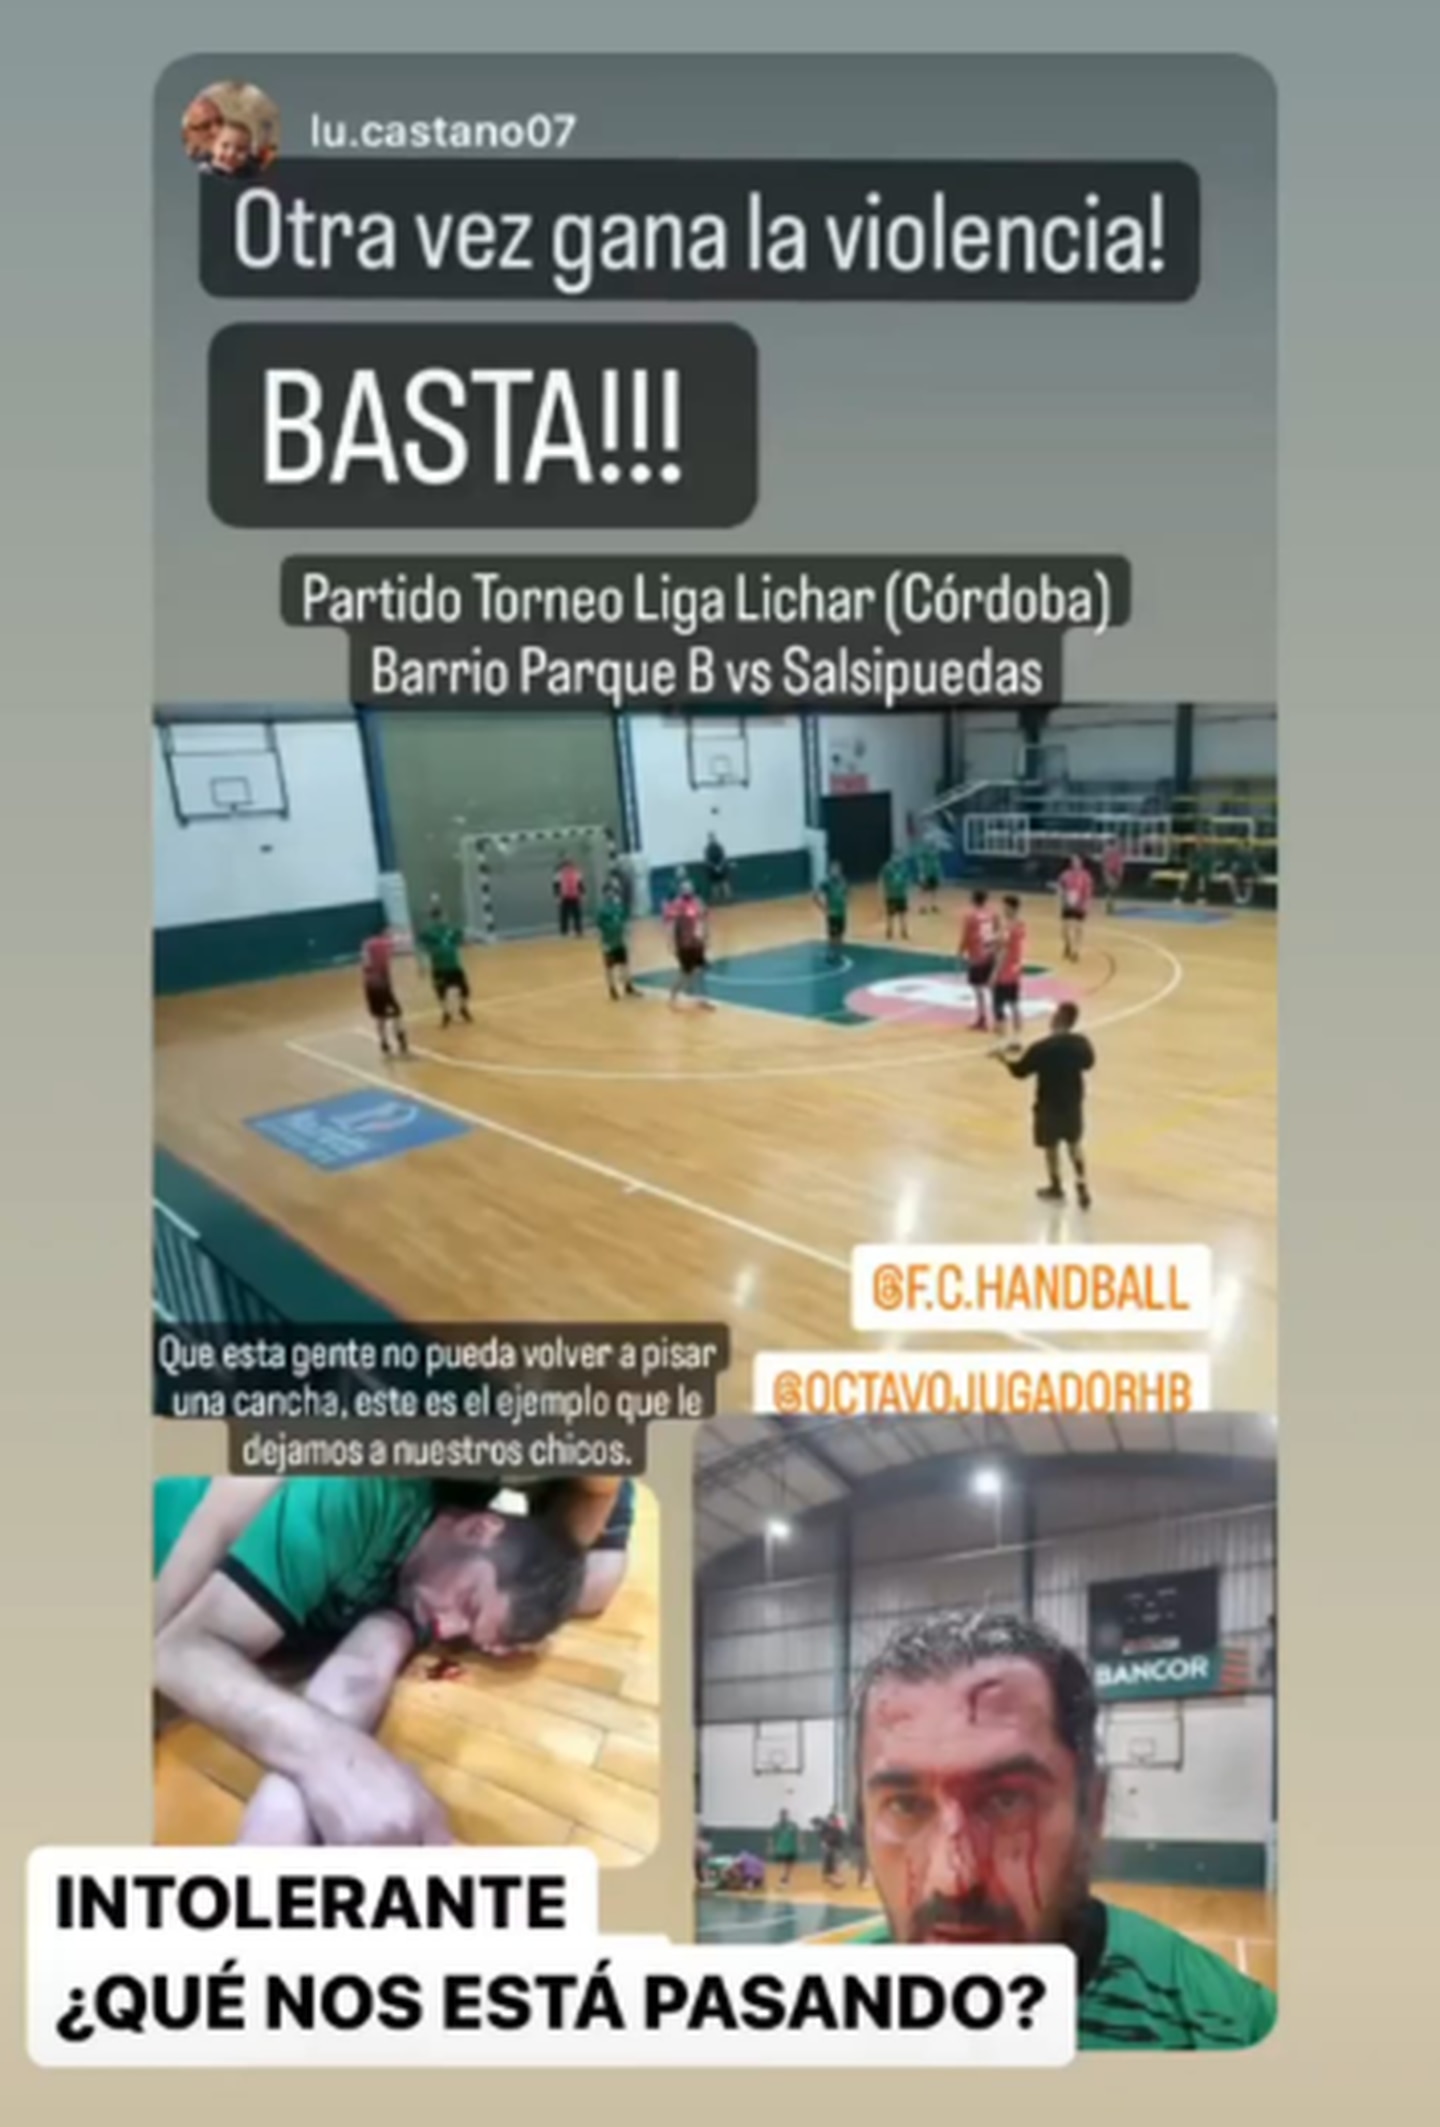 Video: Terrible hecho de violencia en el Handball de Córdoba | Canal Showsport